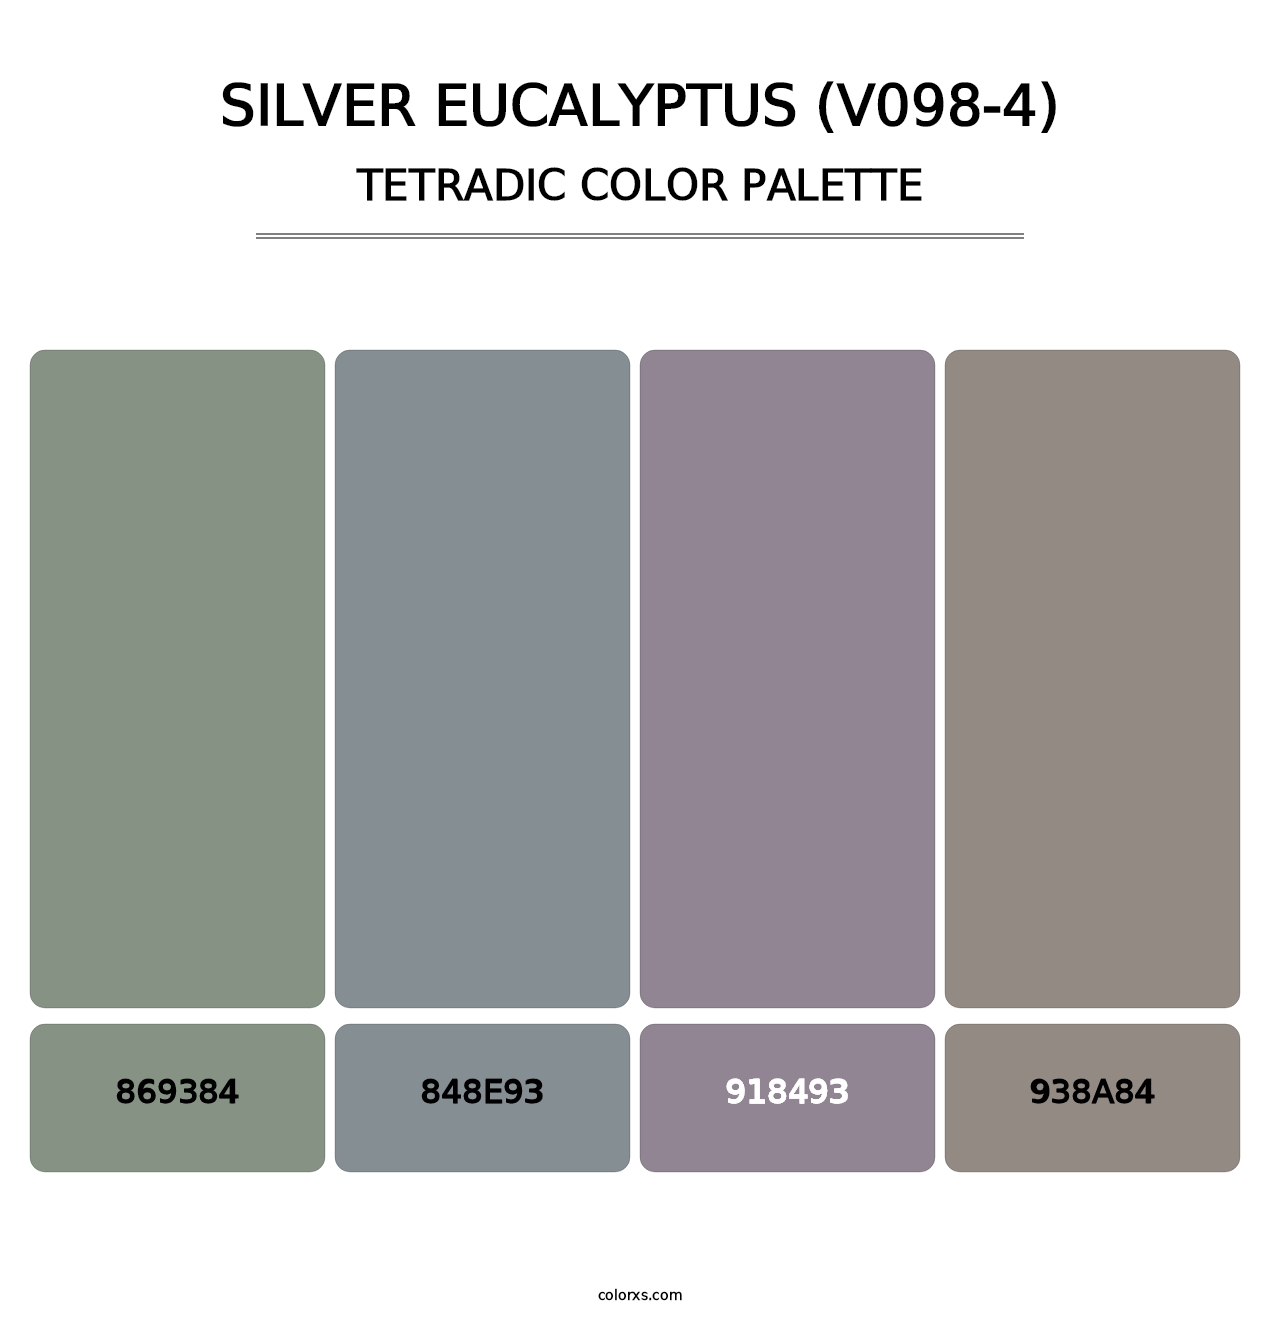 Silver Eucalyptus (V098-4) - Tetradic Color Palette